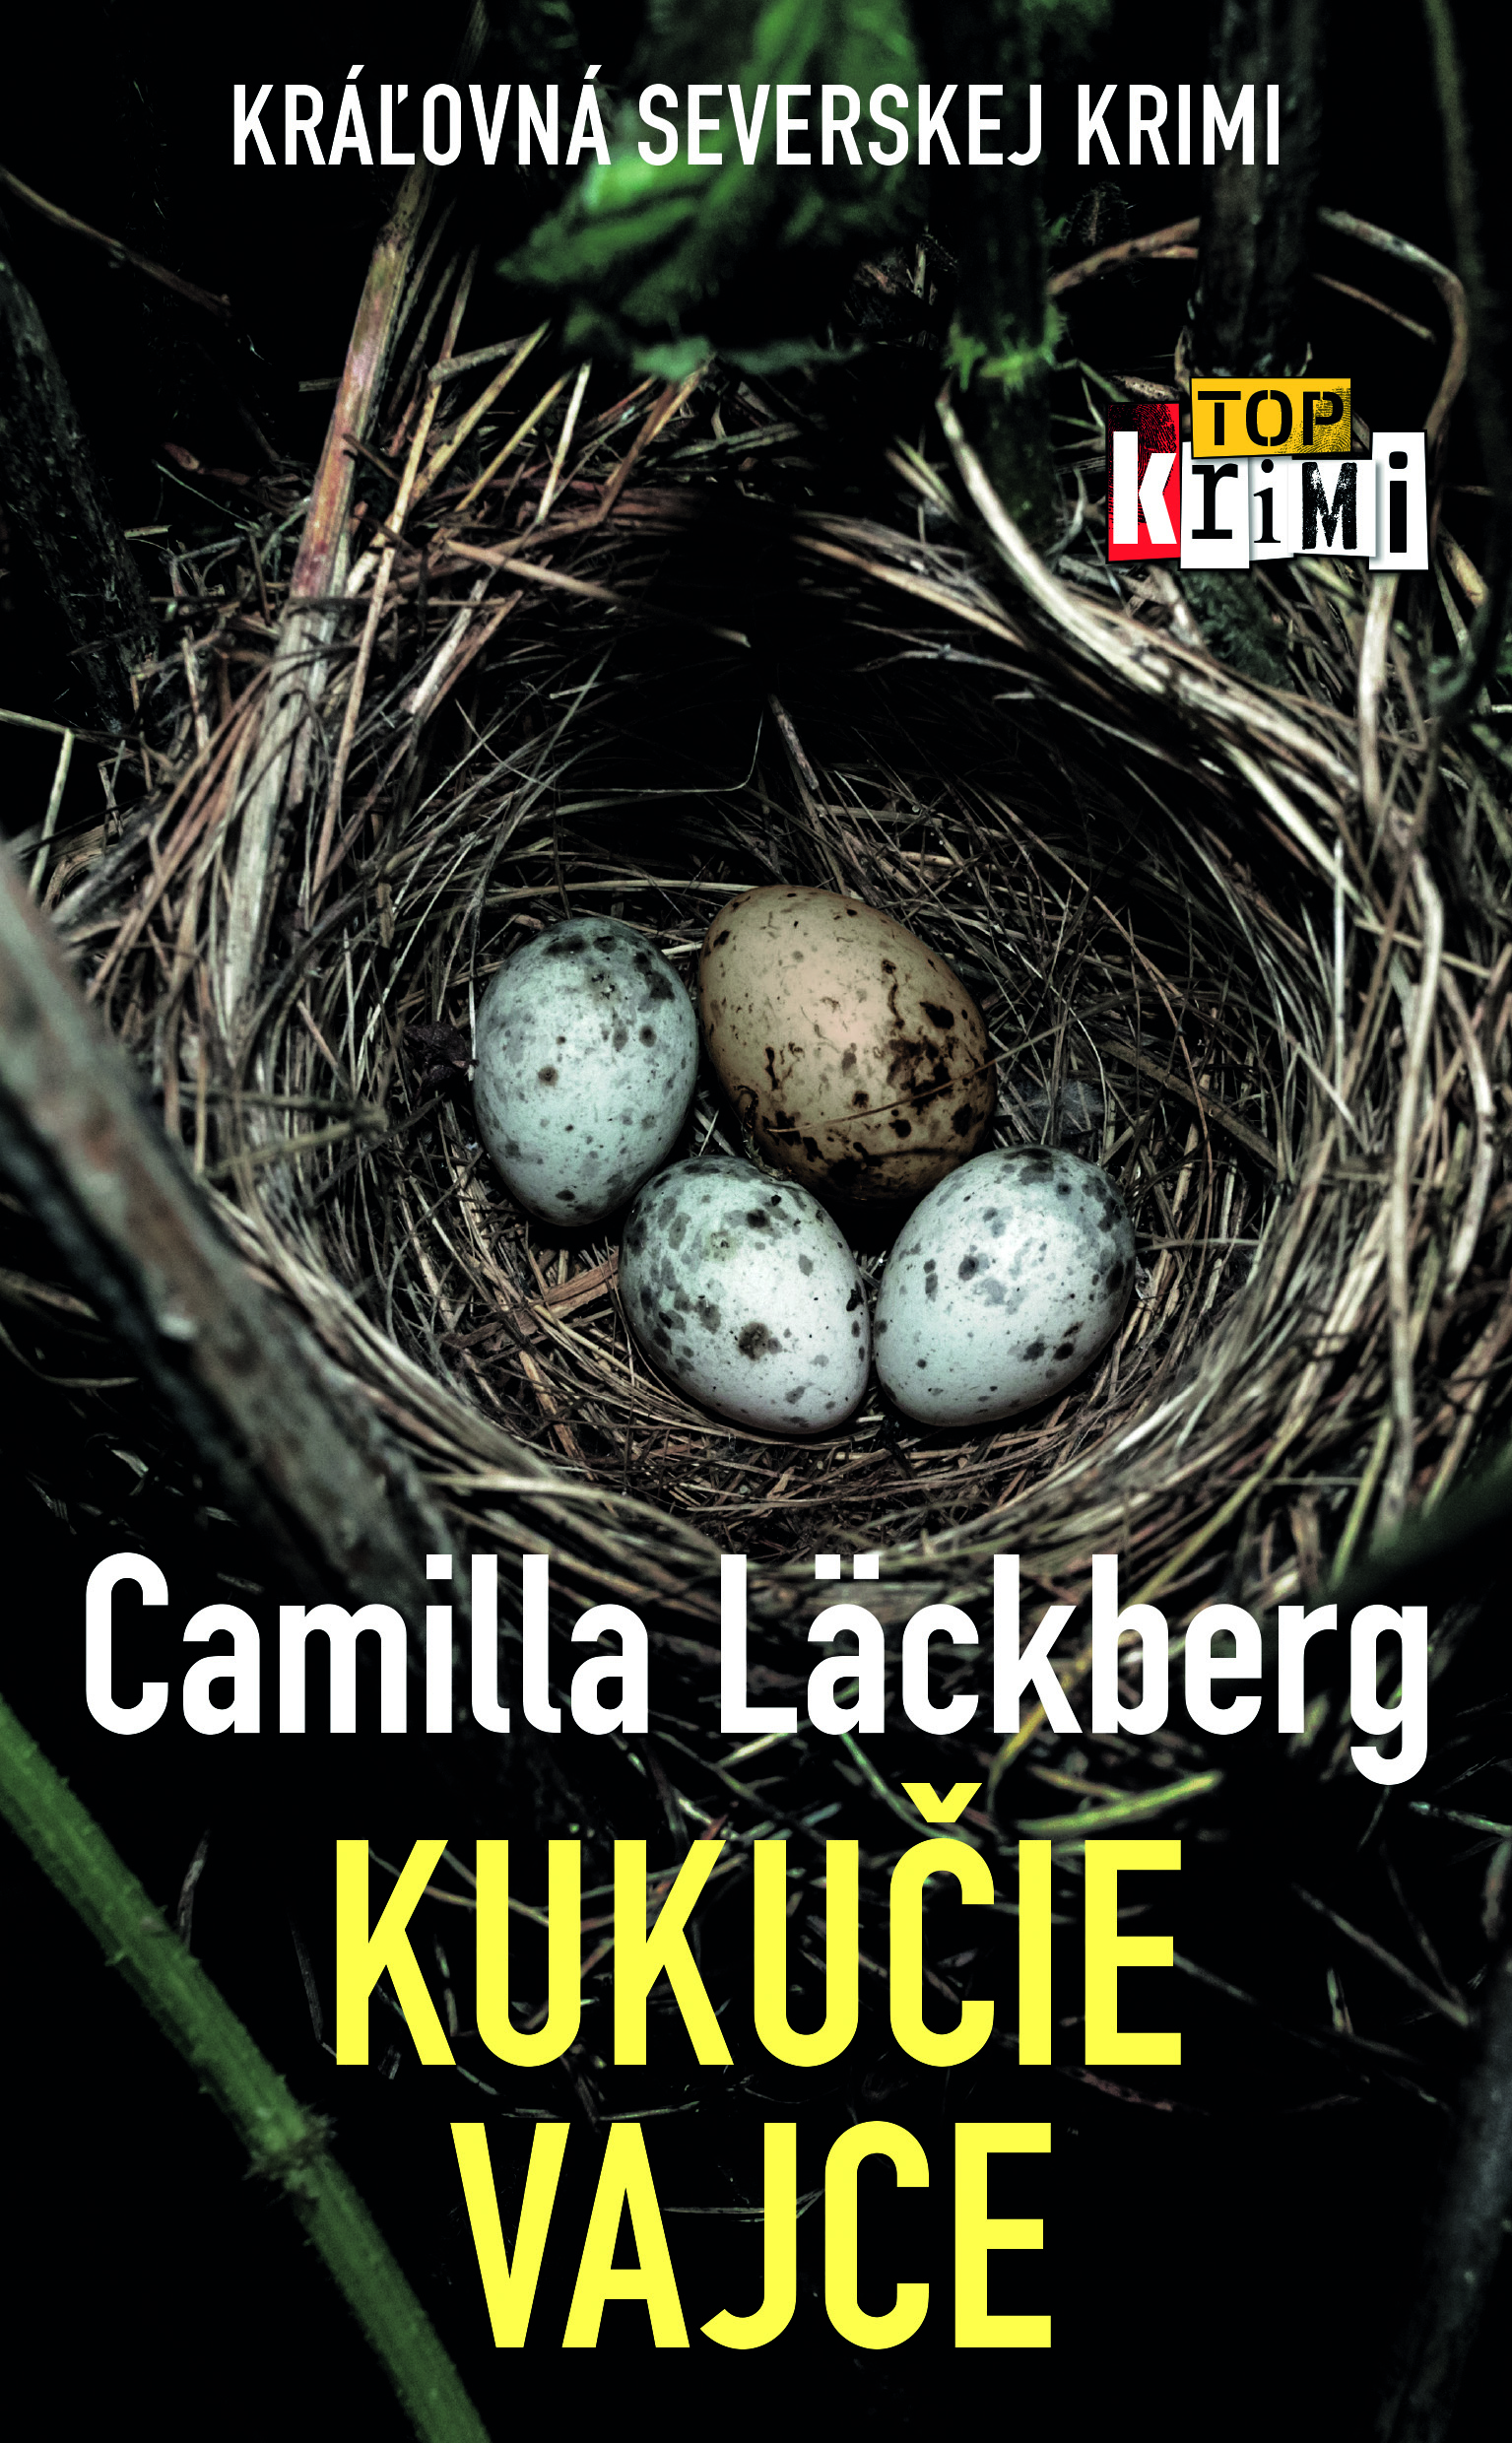 Kukučie vajce - Séria Fjällbacka 11. kniha